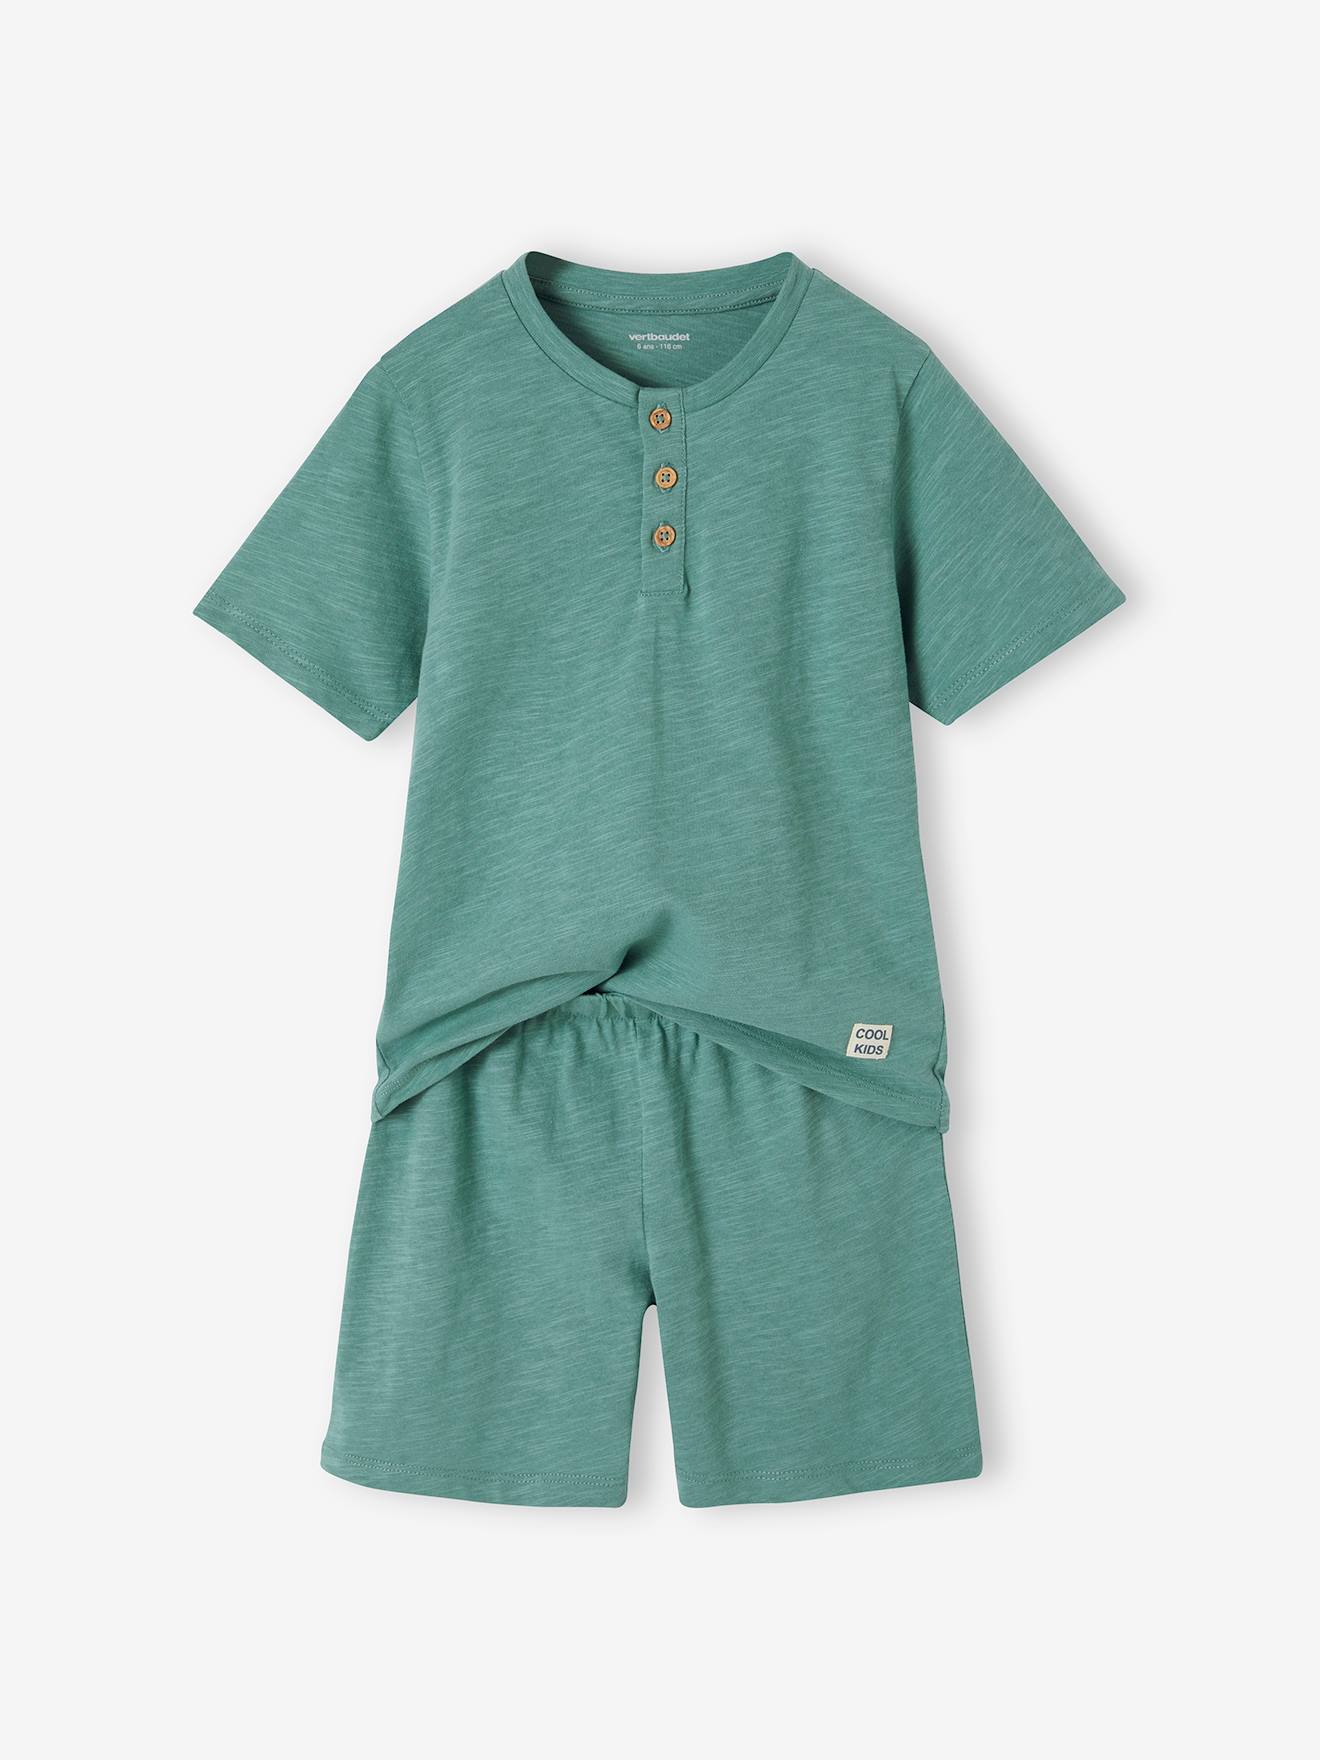 Pyjamas in Marl Jersey Knit for Boys emerald green